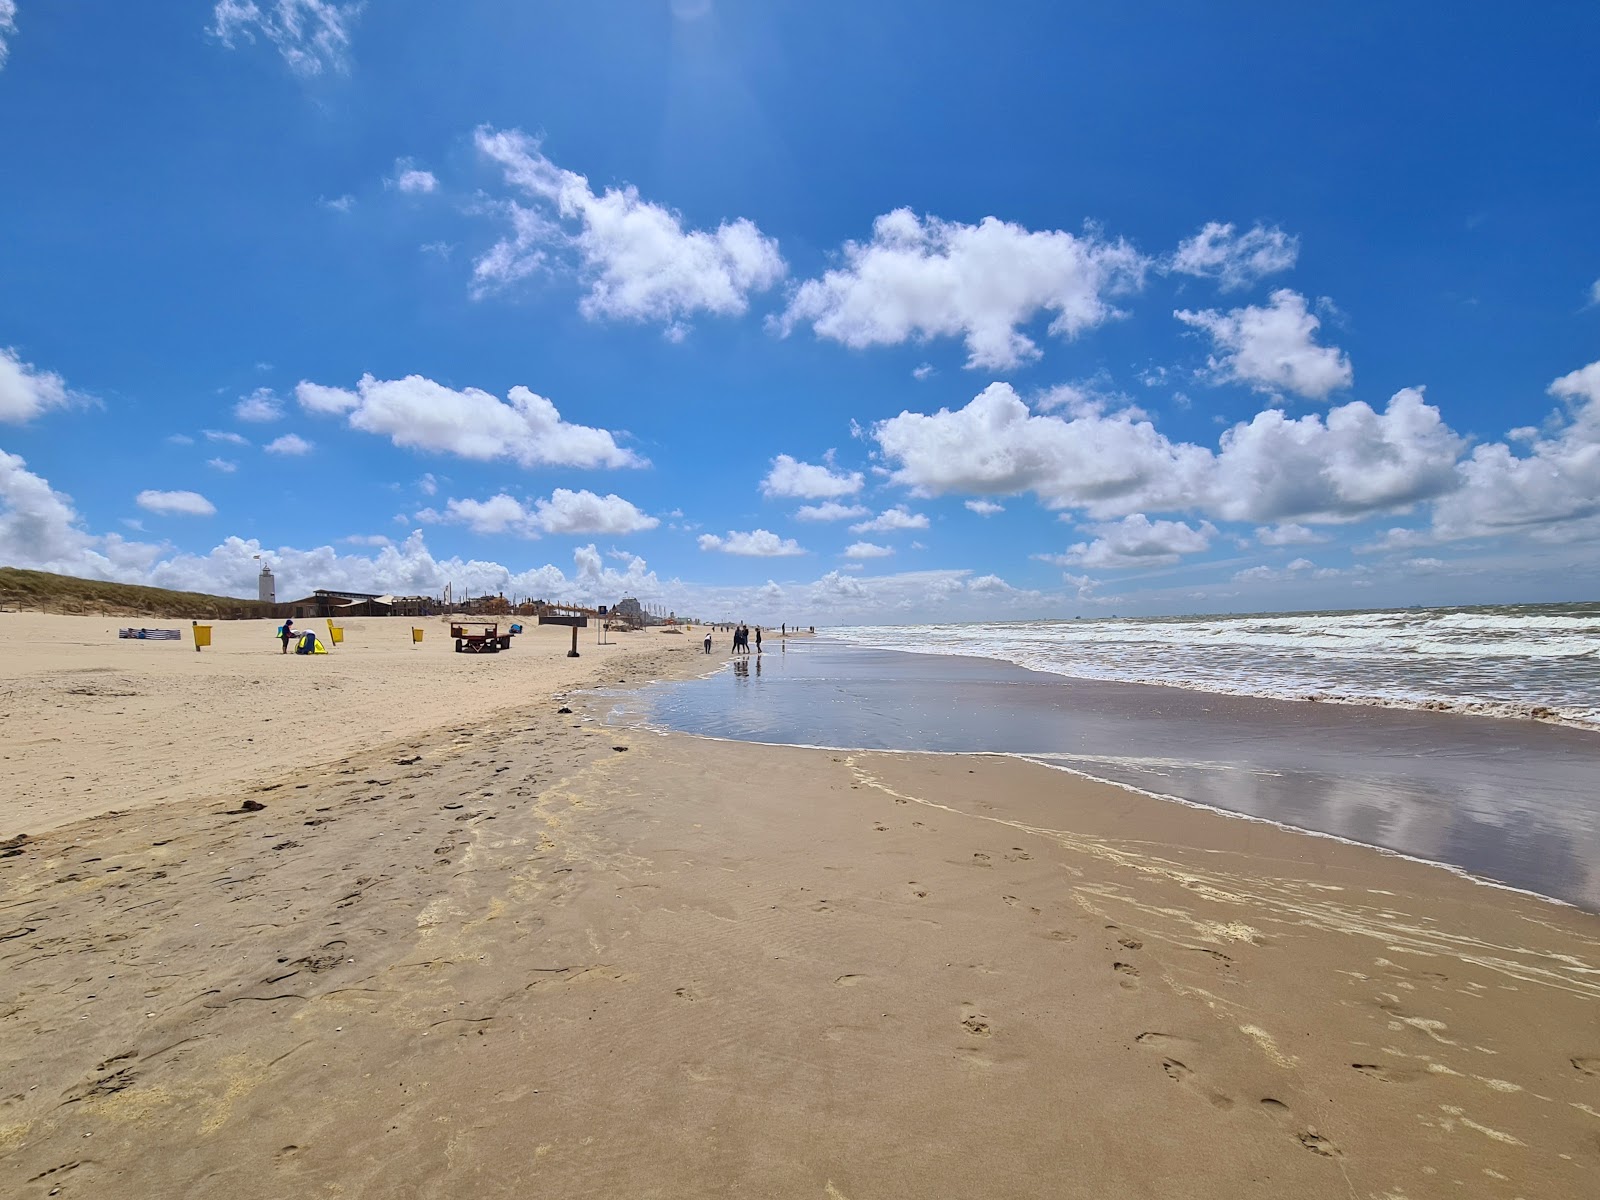 Fotografie cu Noordwijk aan Zee cu o suprafață de nisip strălucitor